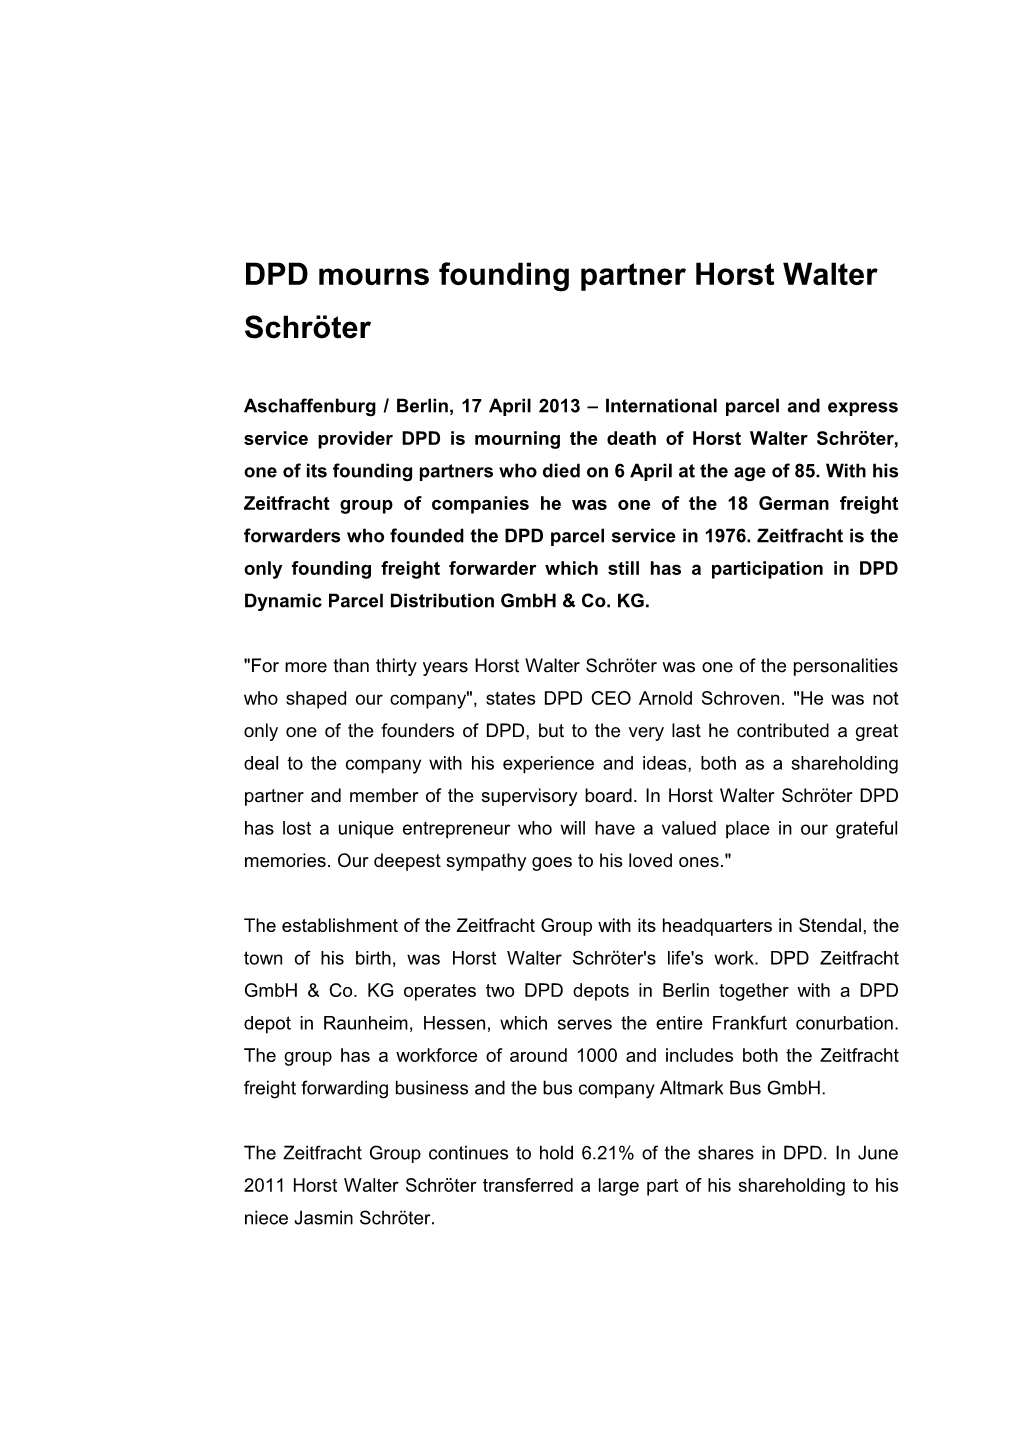 DPD Mourns Founding Partner Horst Walter Schröter